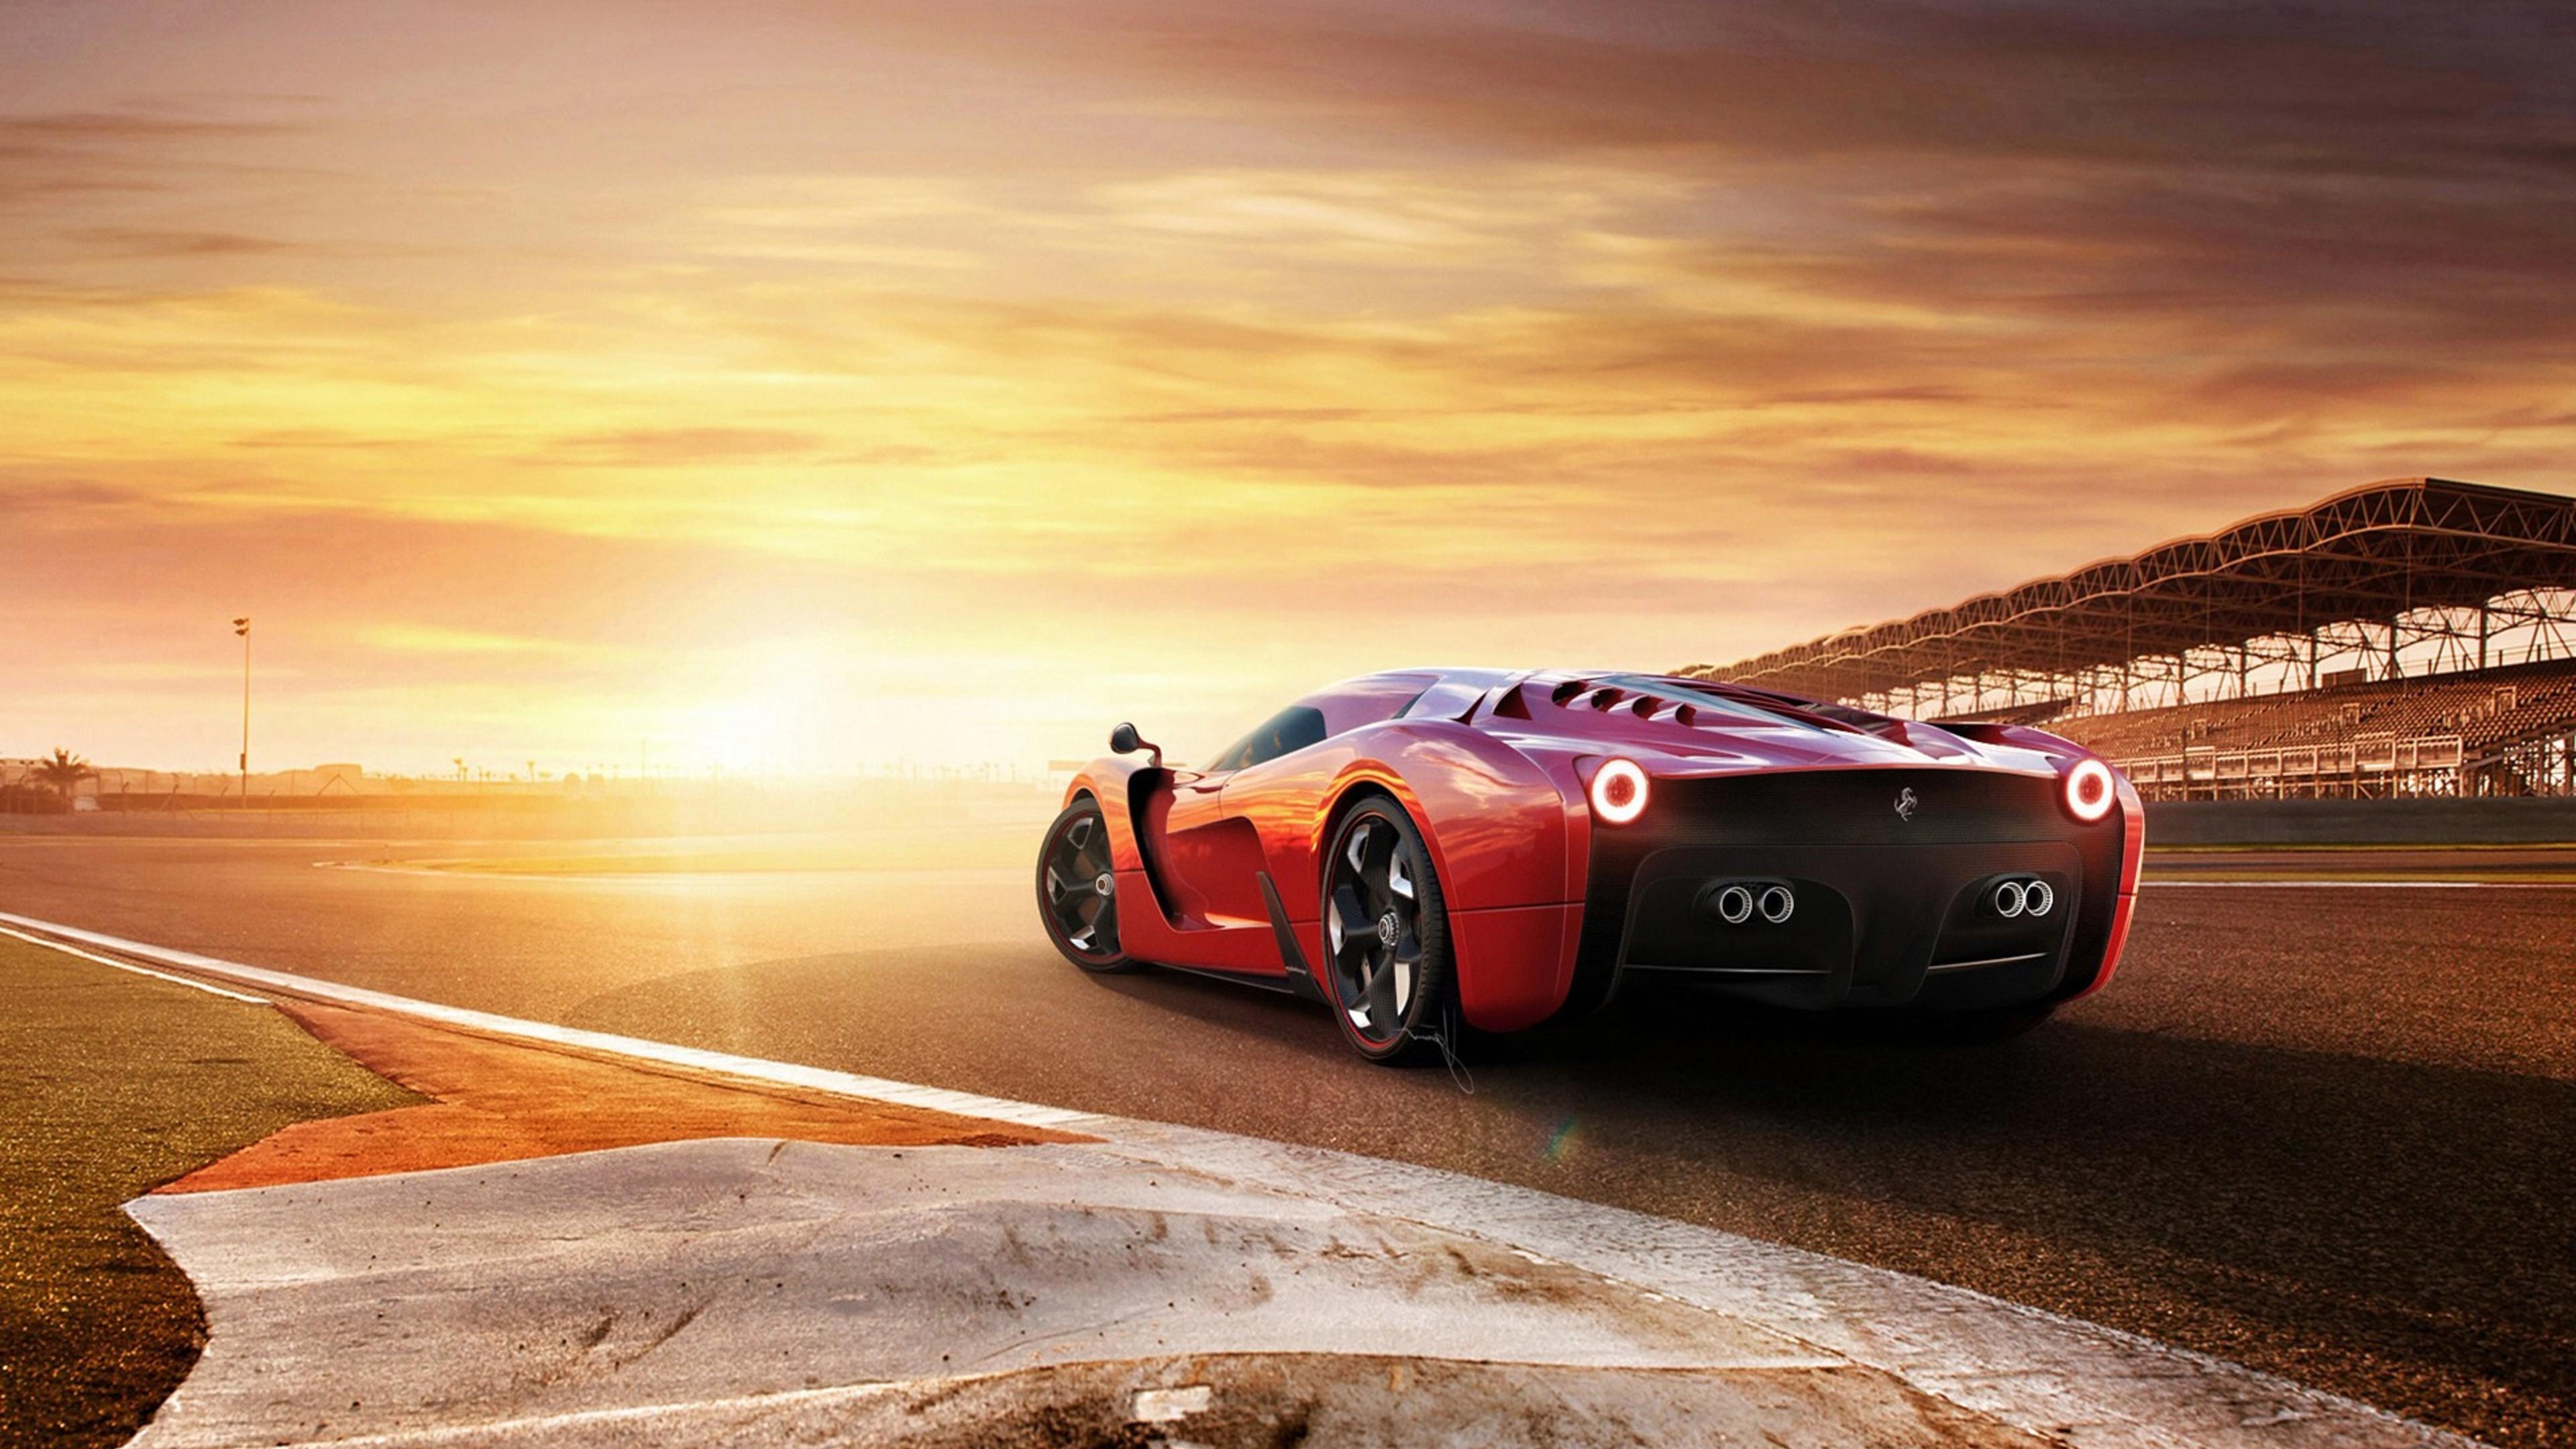 3840 x 2160 · jpeg - Ferrari 458 Concept Car, HD Cars, 4k Wallpapers, Images, Backgrounds ...